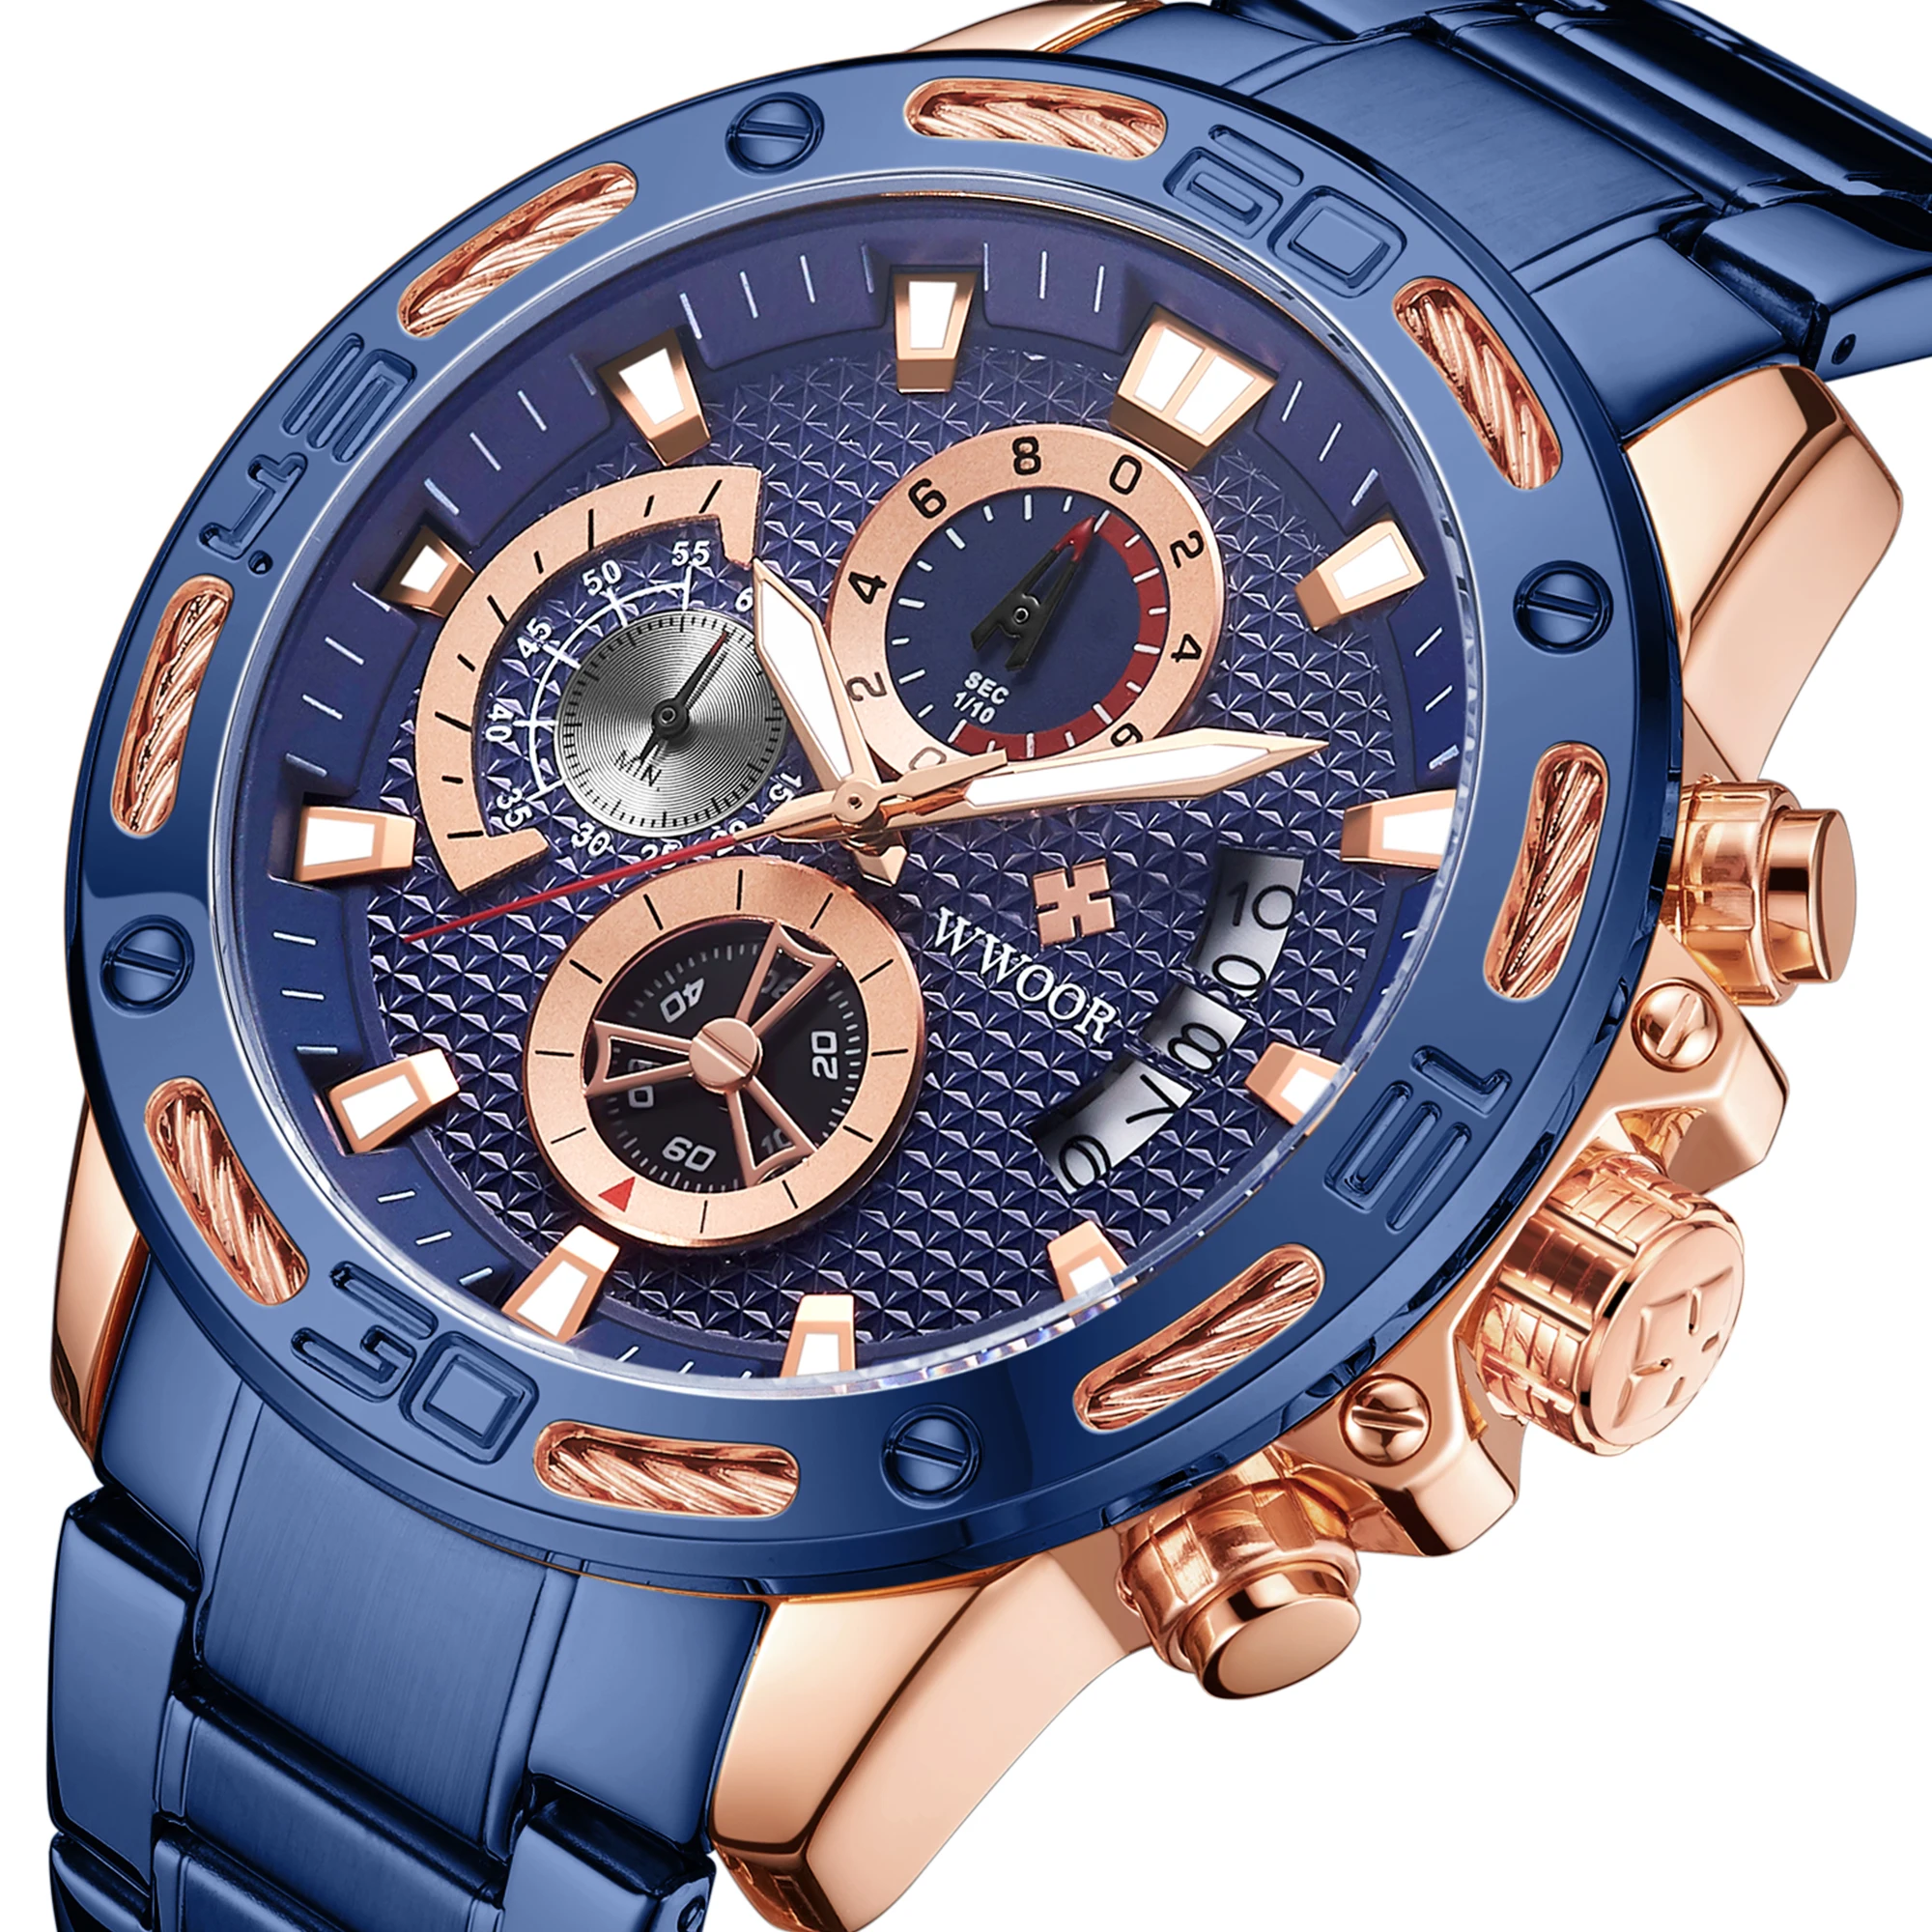 

2020 New WWOOR 8879 Stylish Sport Chronograph Watch Men Stainless Steel Waterproof Wrist Watch Luxury Date Quartz Blue Watches